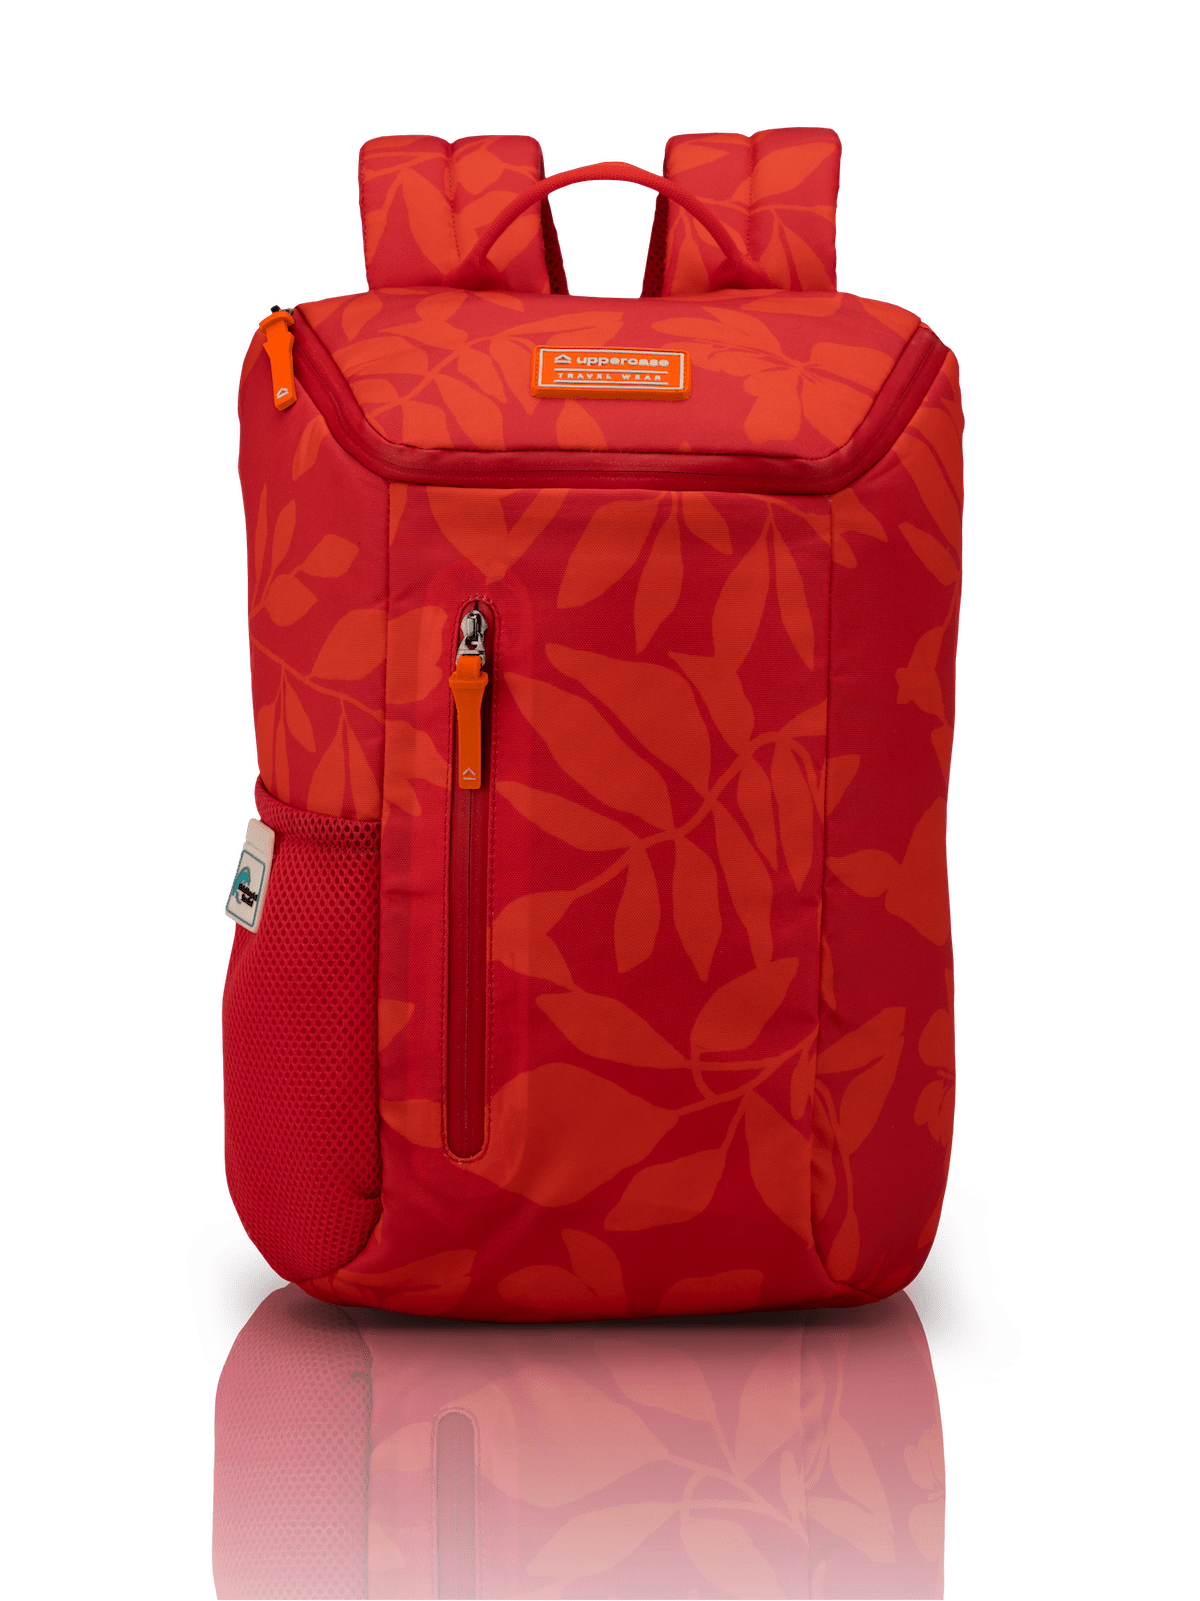 uppercase Printed 15" Laptop Backpack WaterRepellent College Travel Bag 25L Pink